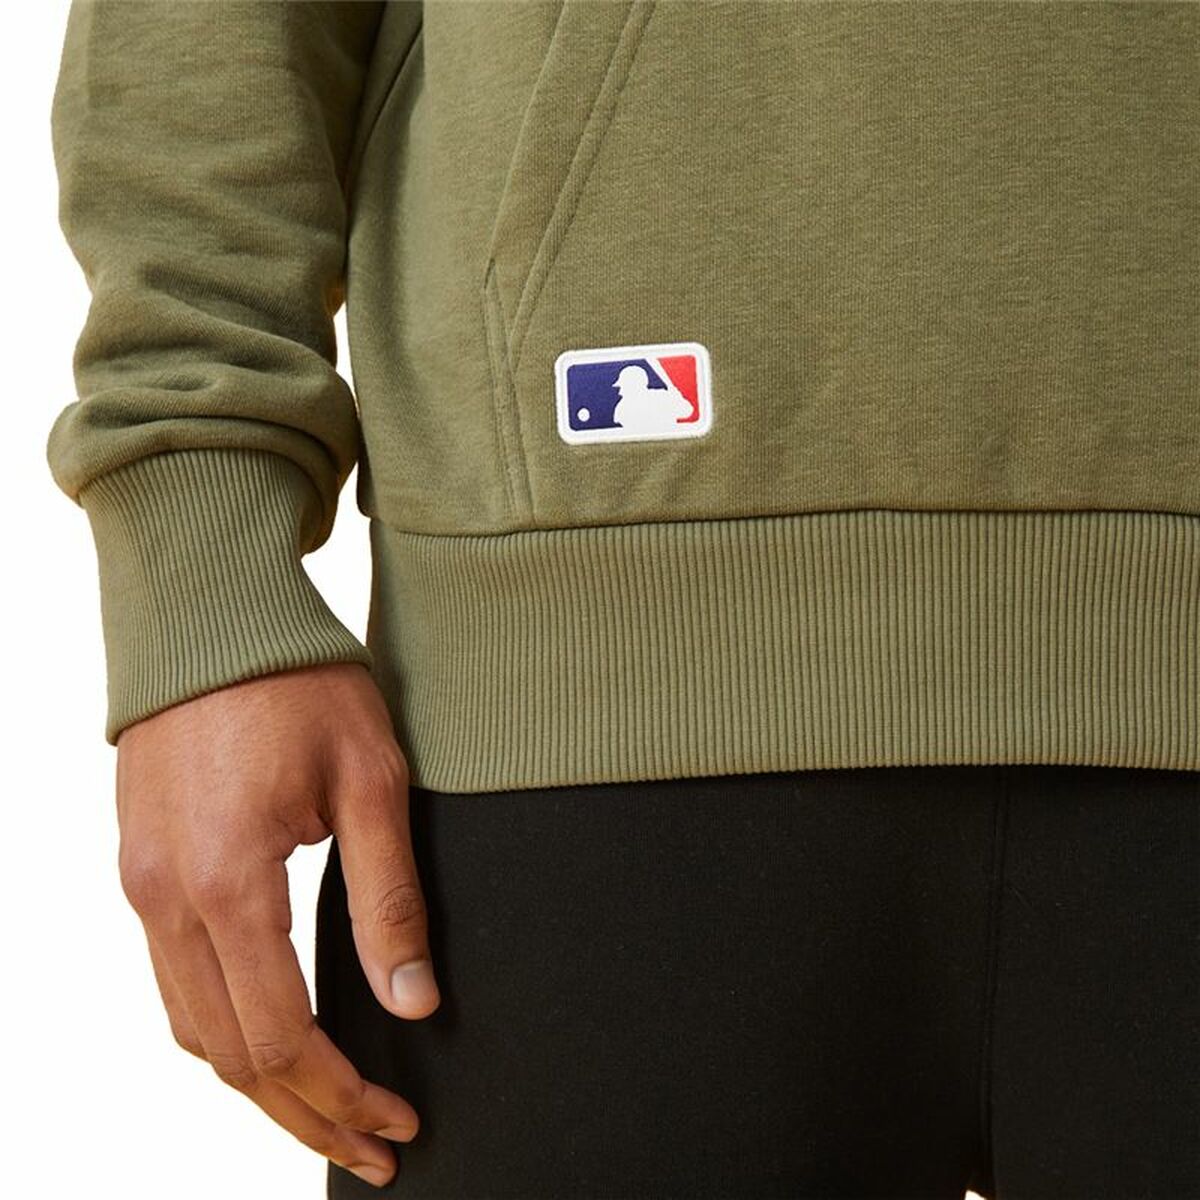 Kaufe Herren Sweater mit Kapuze New Era MLB New York Yankees Khaki bei AWK Flagship um € 68.00